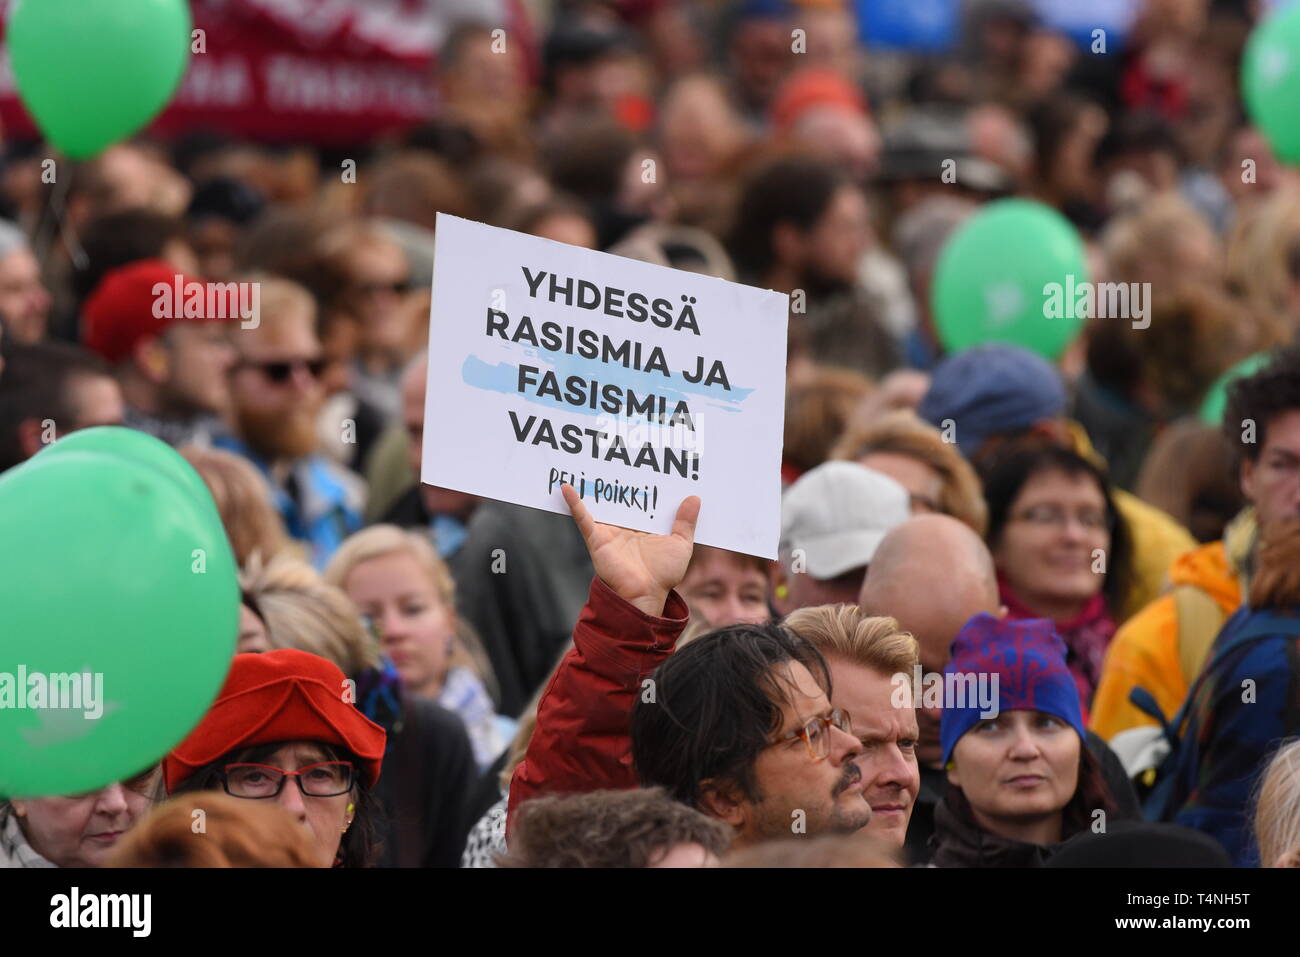 Helsinki, Finnland - 24 September 2016: Peli - poikki Rikotaan hiljaisuus - Demonstration gegen Rassismus und rechte Gewalt in Helsinki Stockfoto